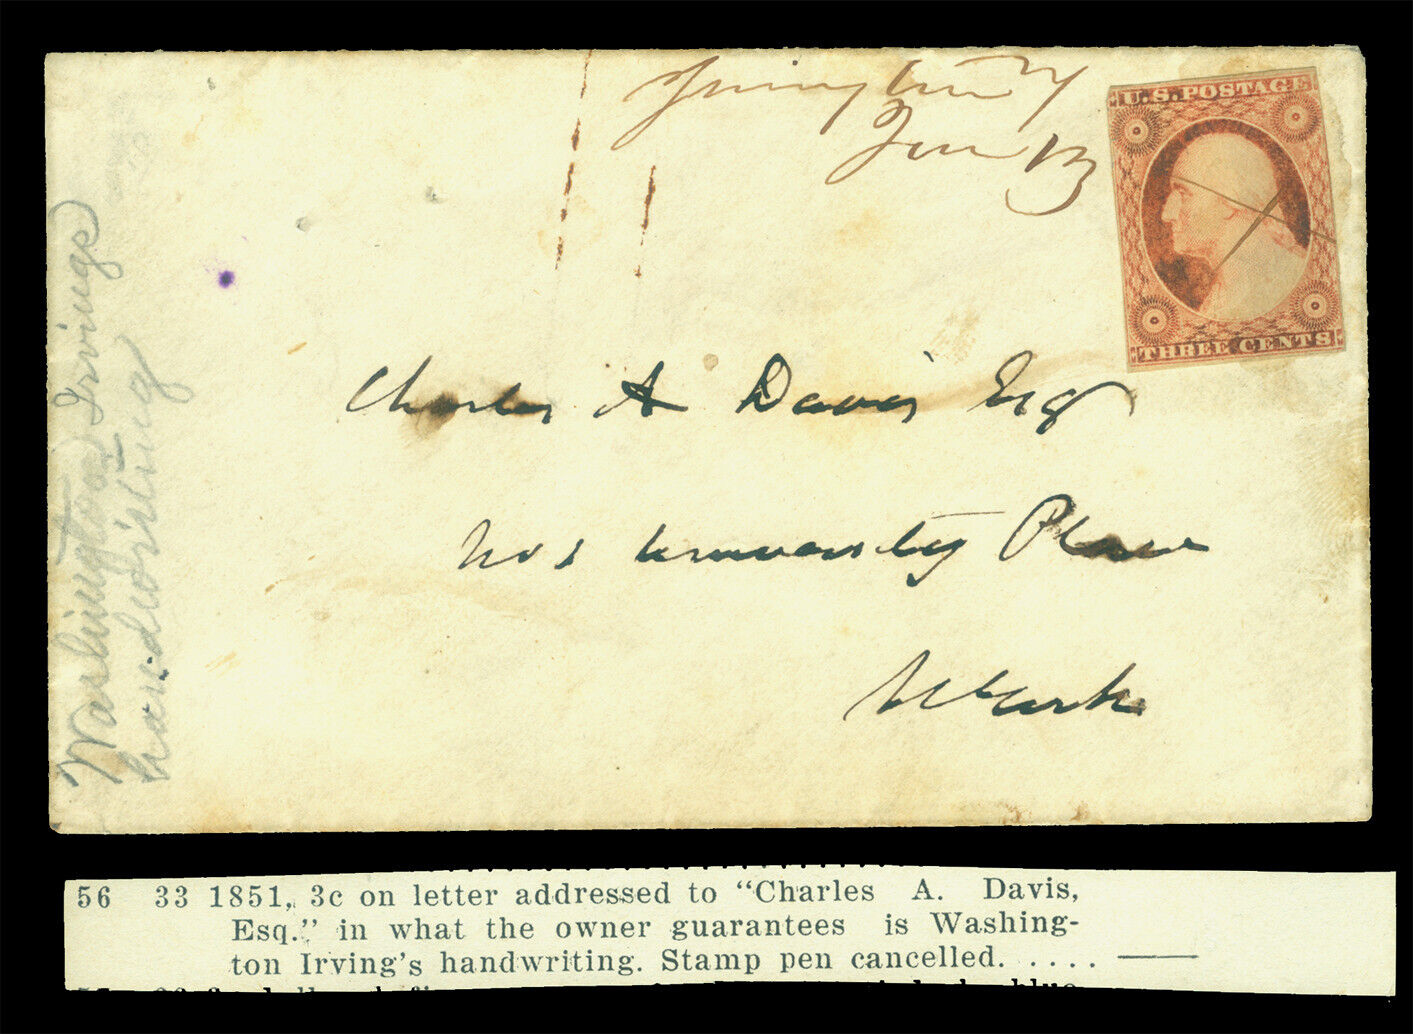 US 1851 Washington 3c cover from WASHINGTON IRVING addressed to Charles A. Davis